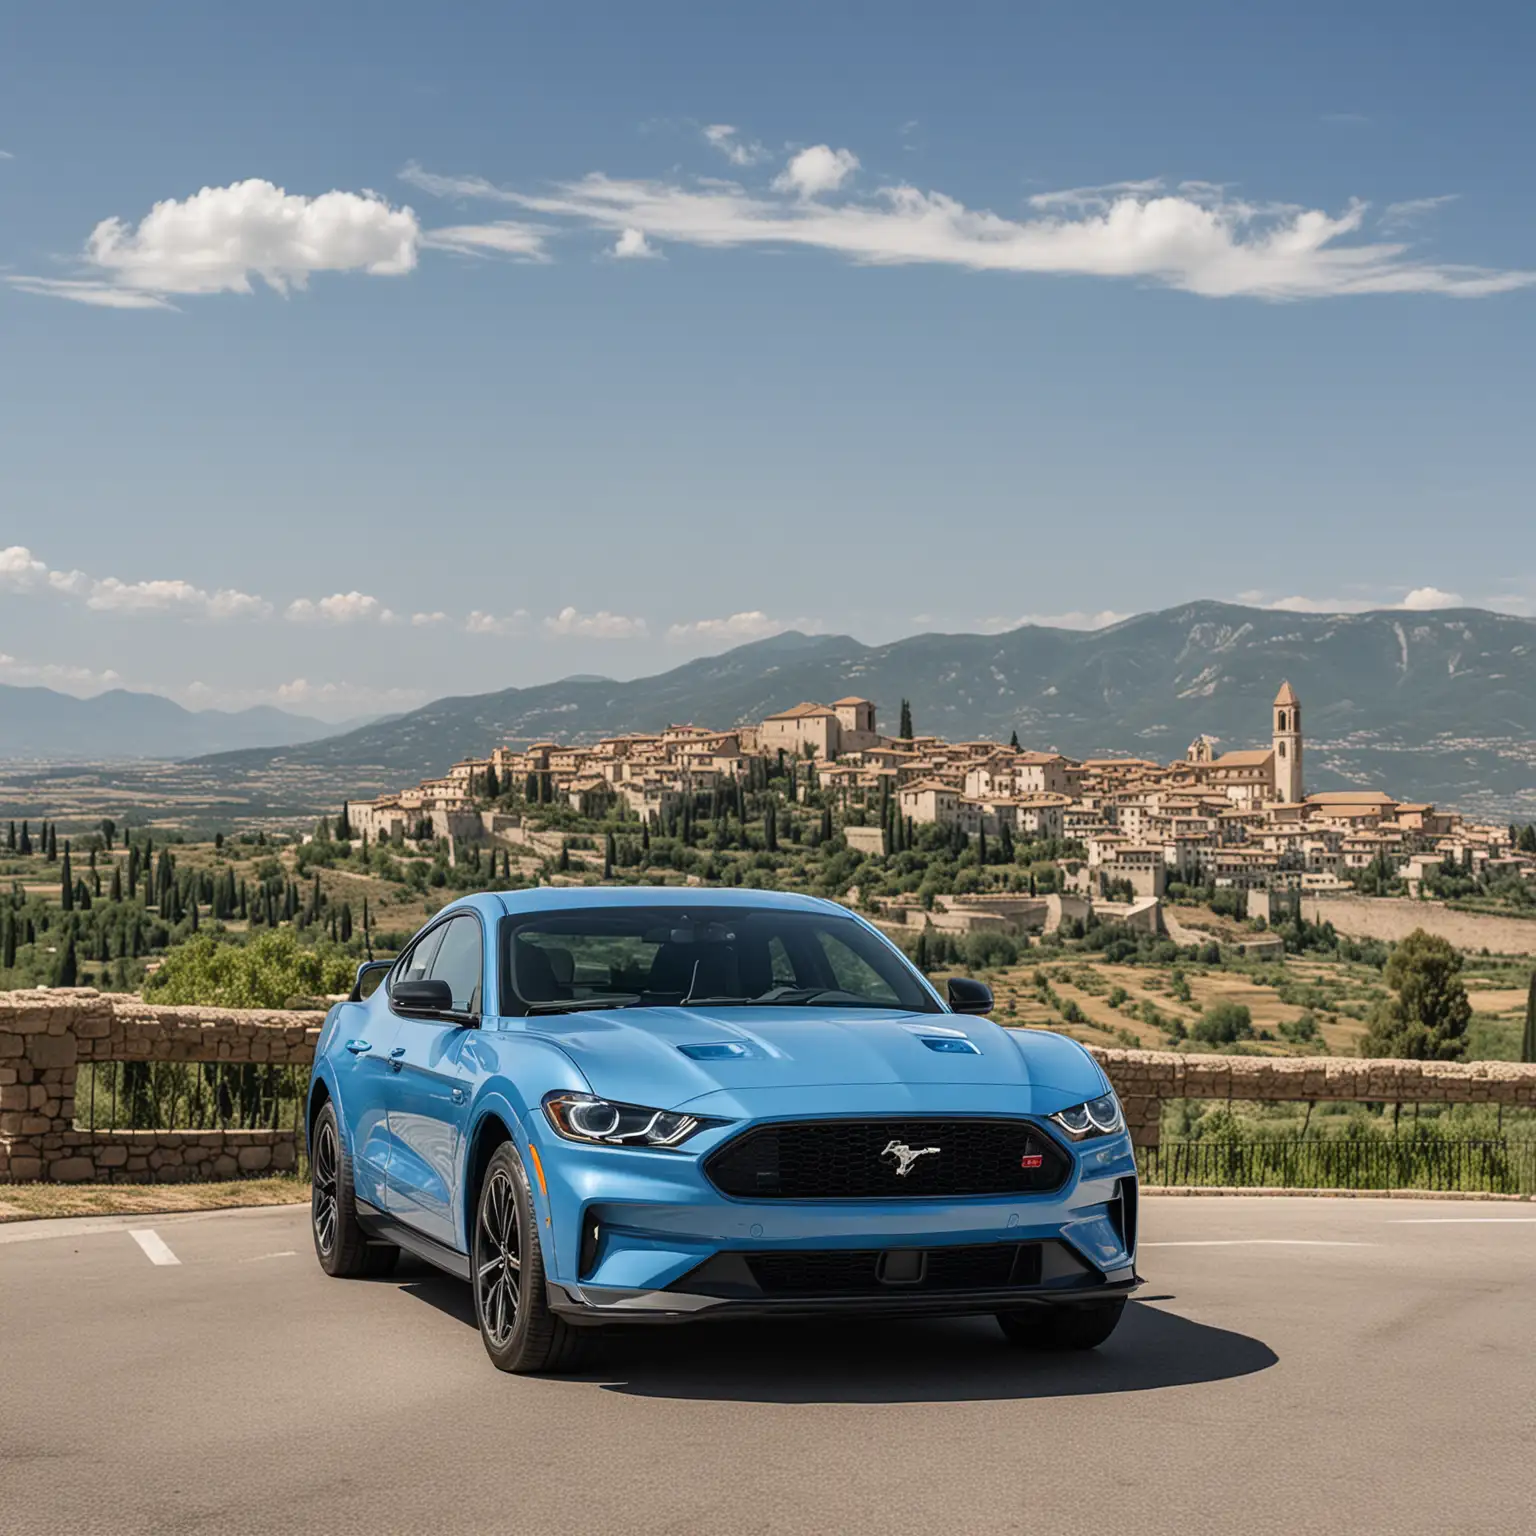 Vapor Blue Ford Mustang Mach E against Assisi Umbria Skyline